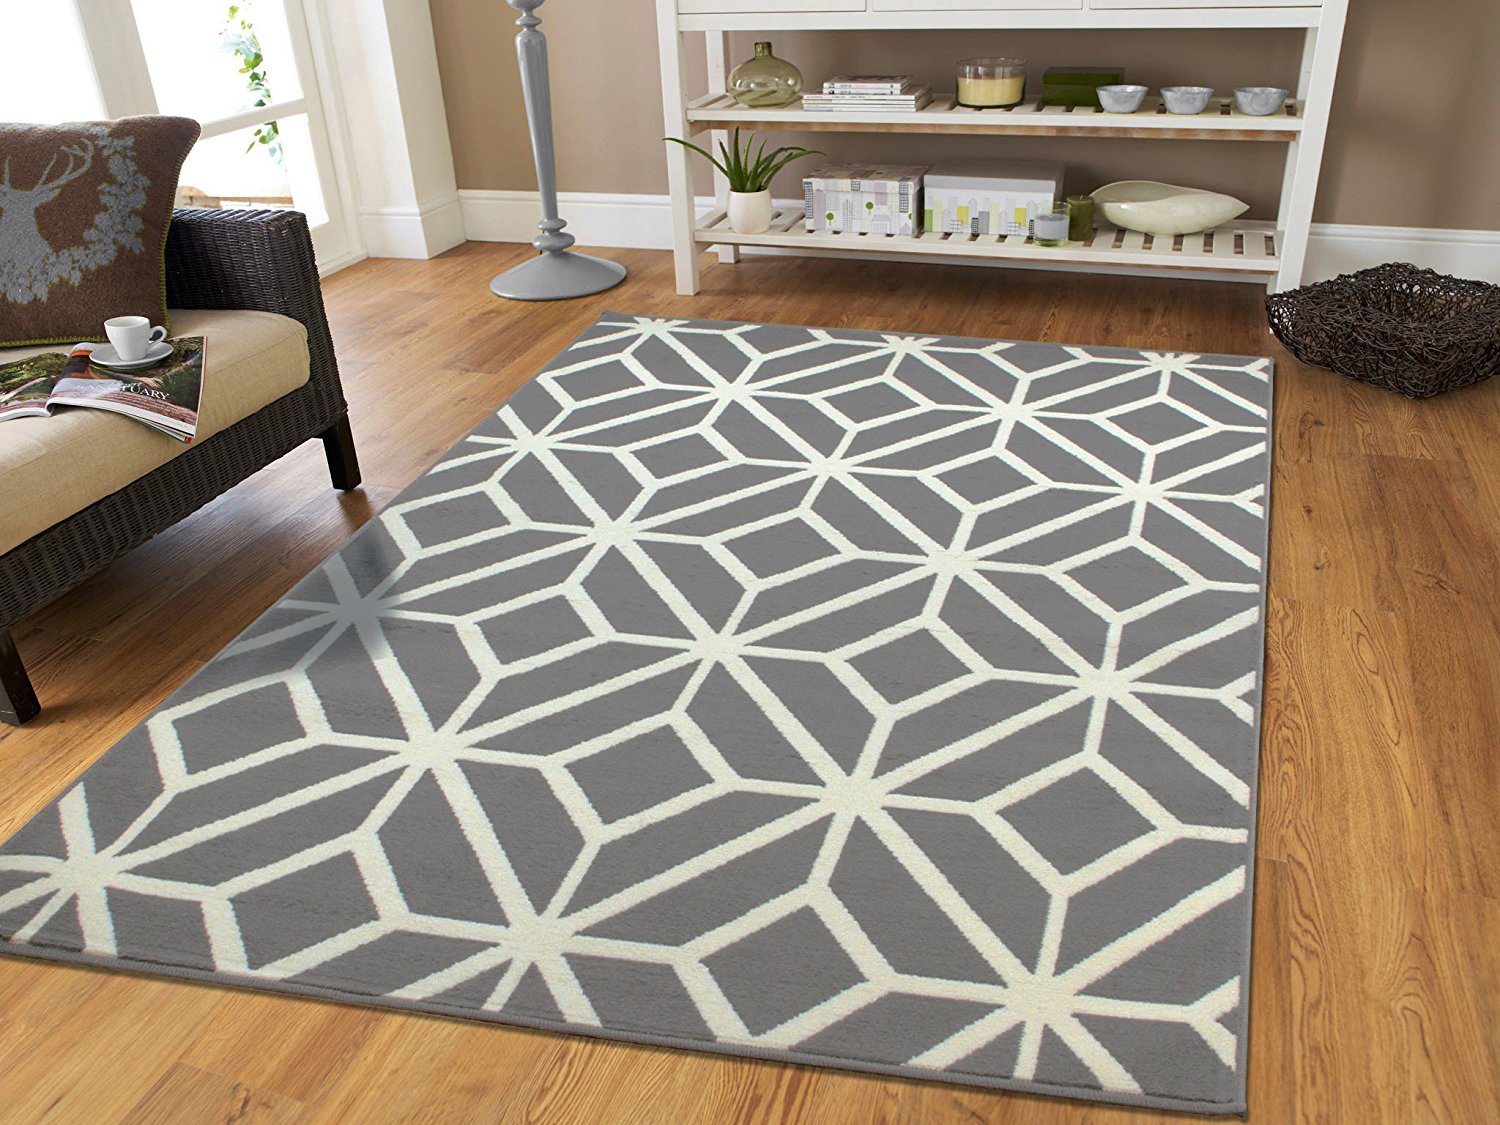 Are custom rugs really worth the money?